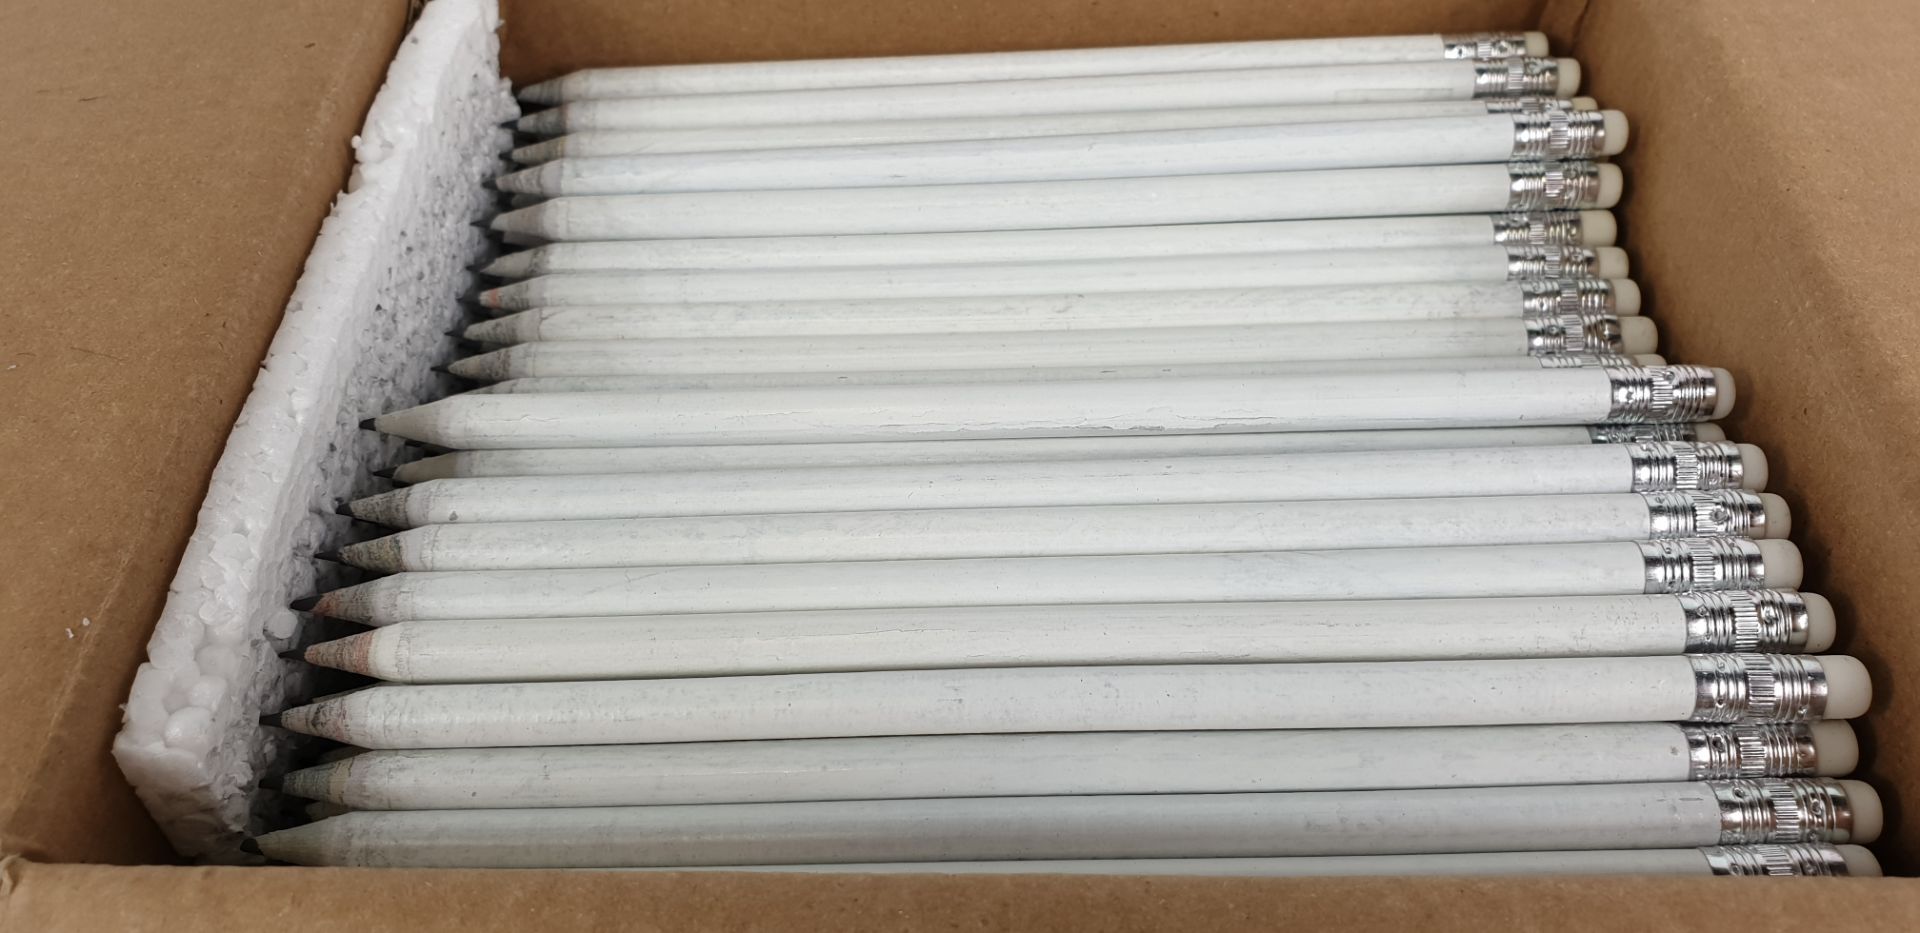 250 X PACKS OF 8 NEWSPAPER PENCILS IN 1 BOX